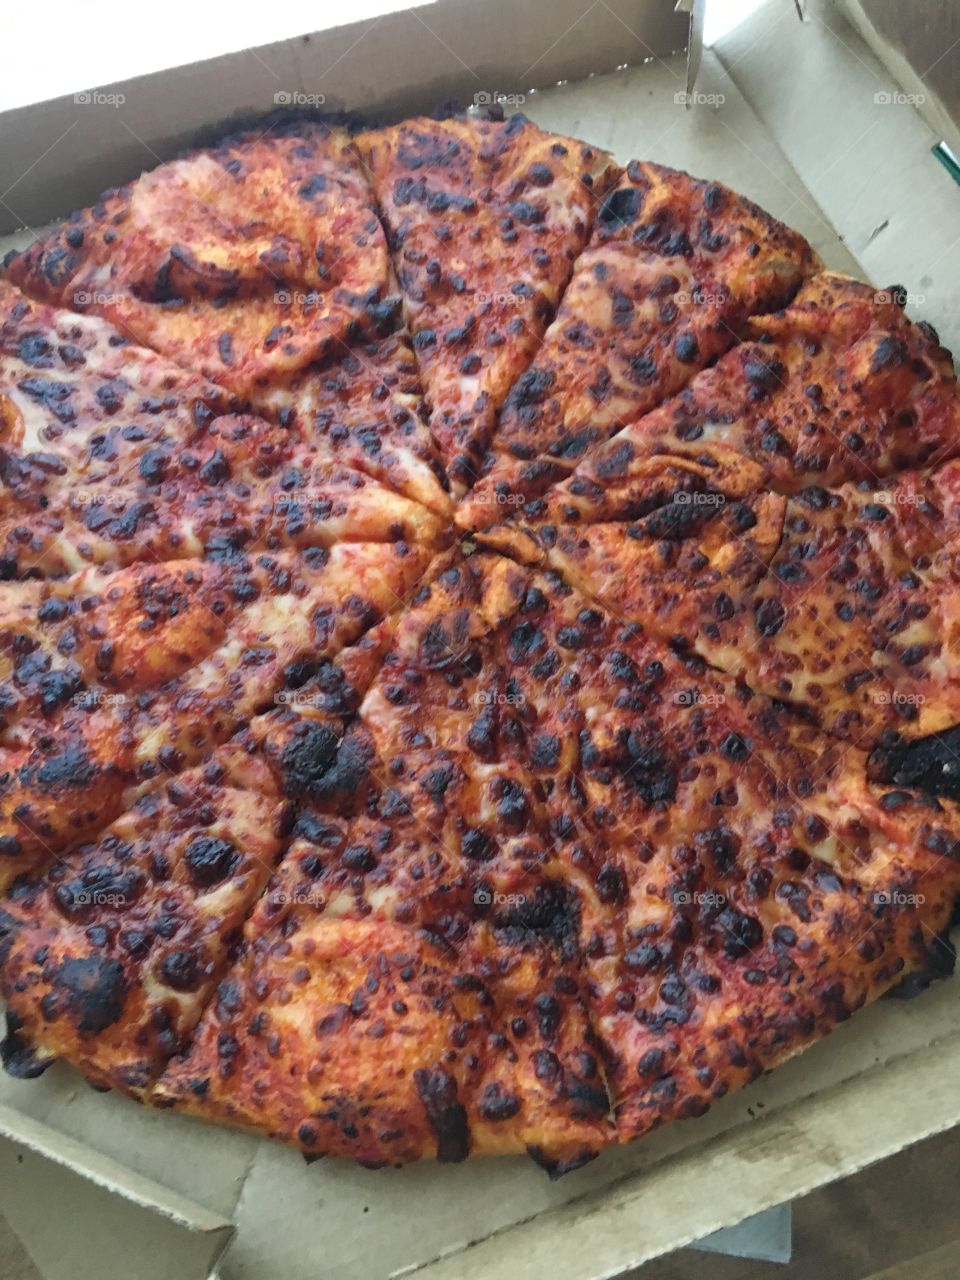 Burnt Pizza
